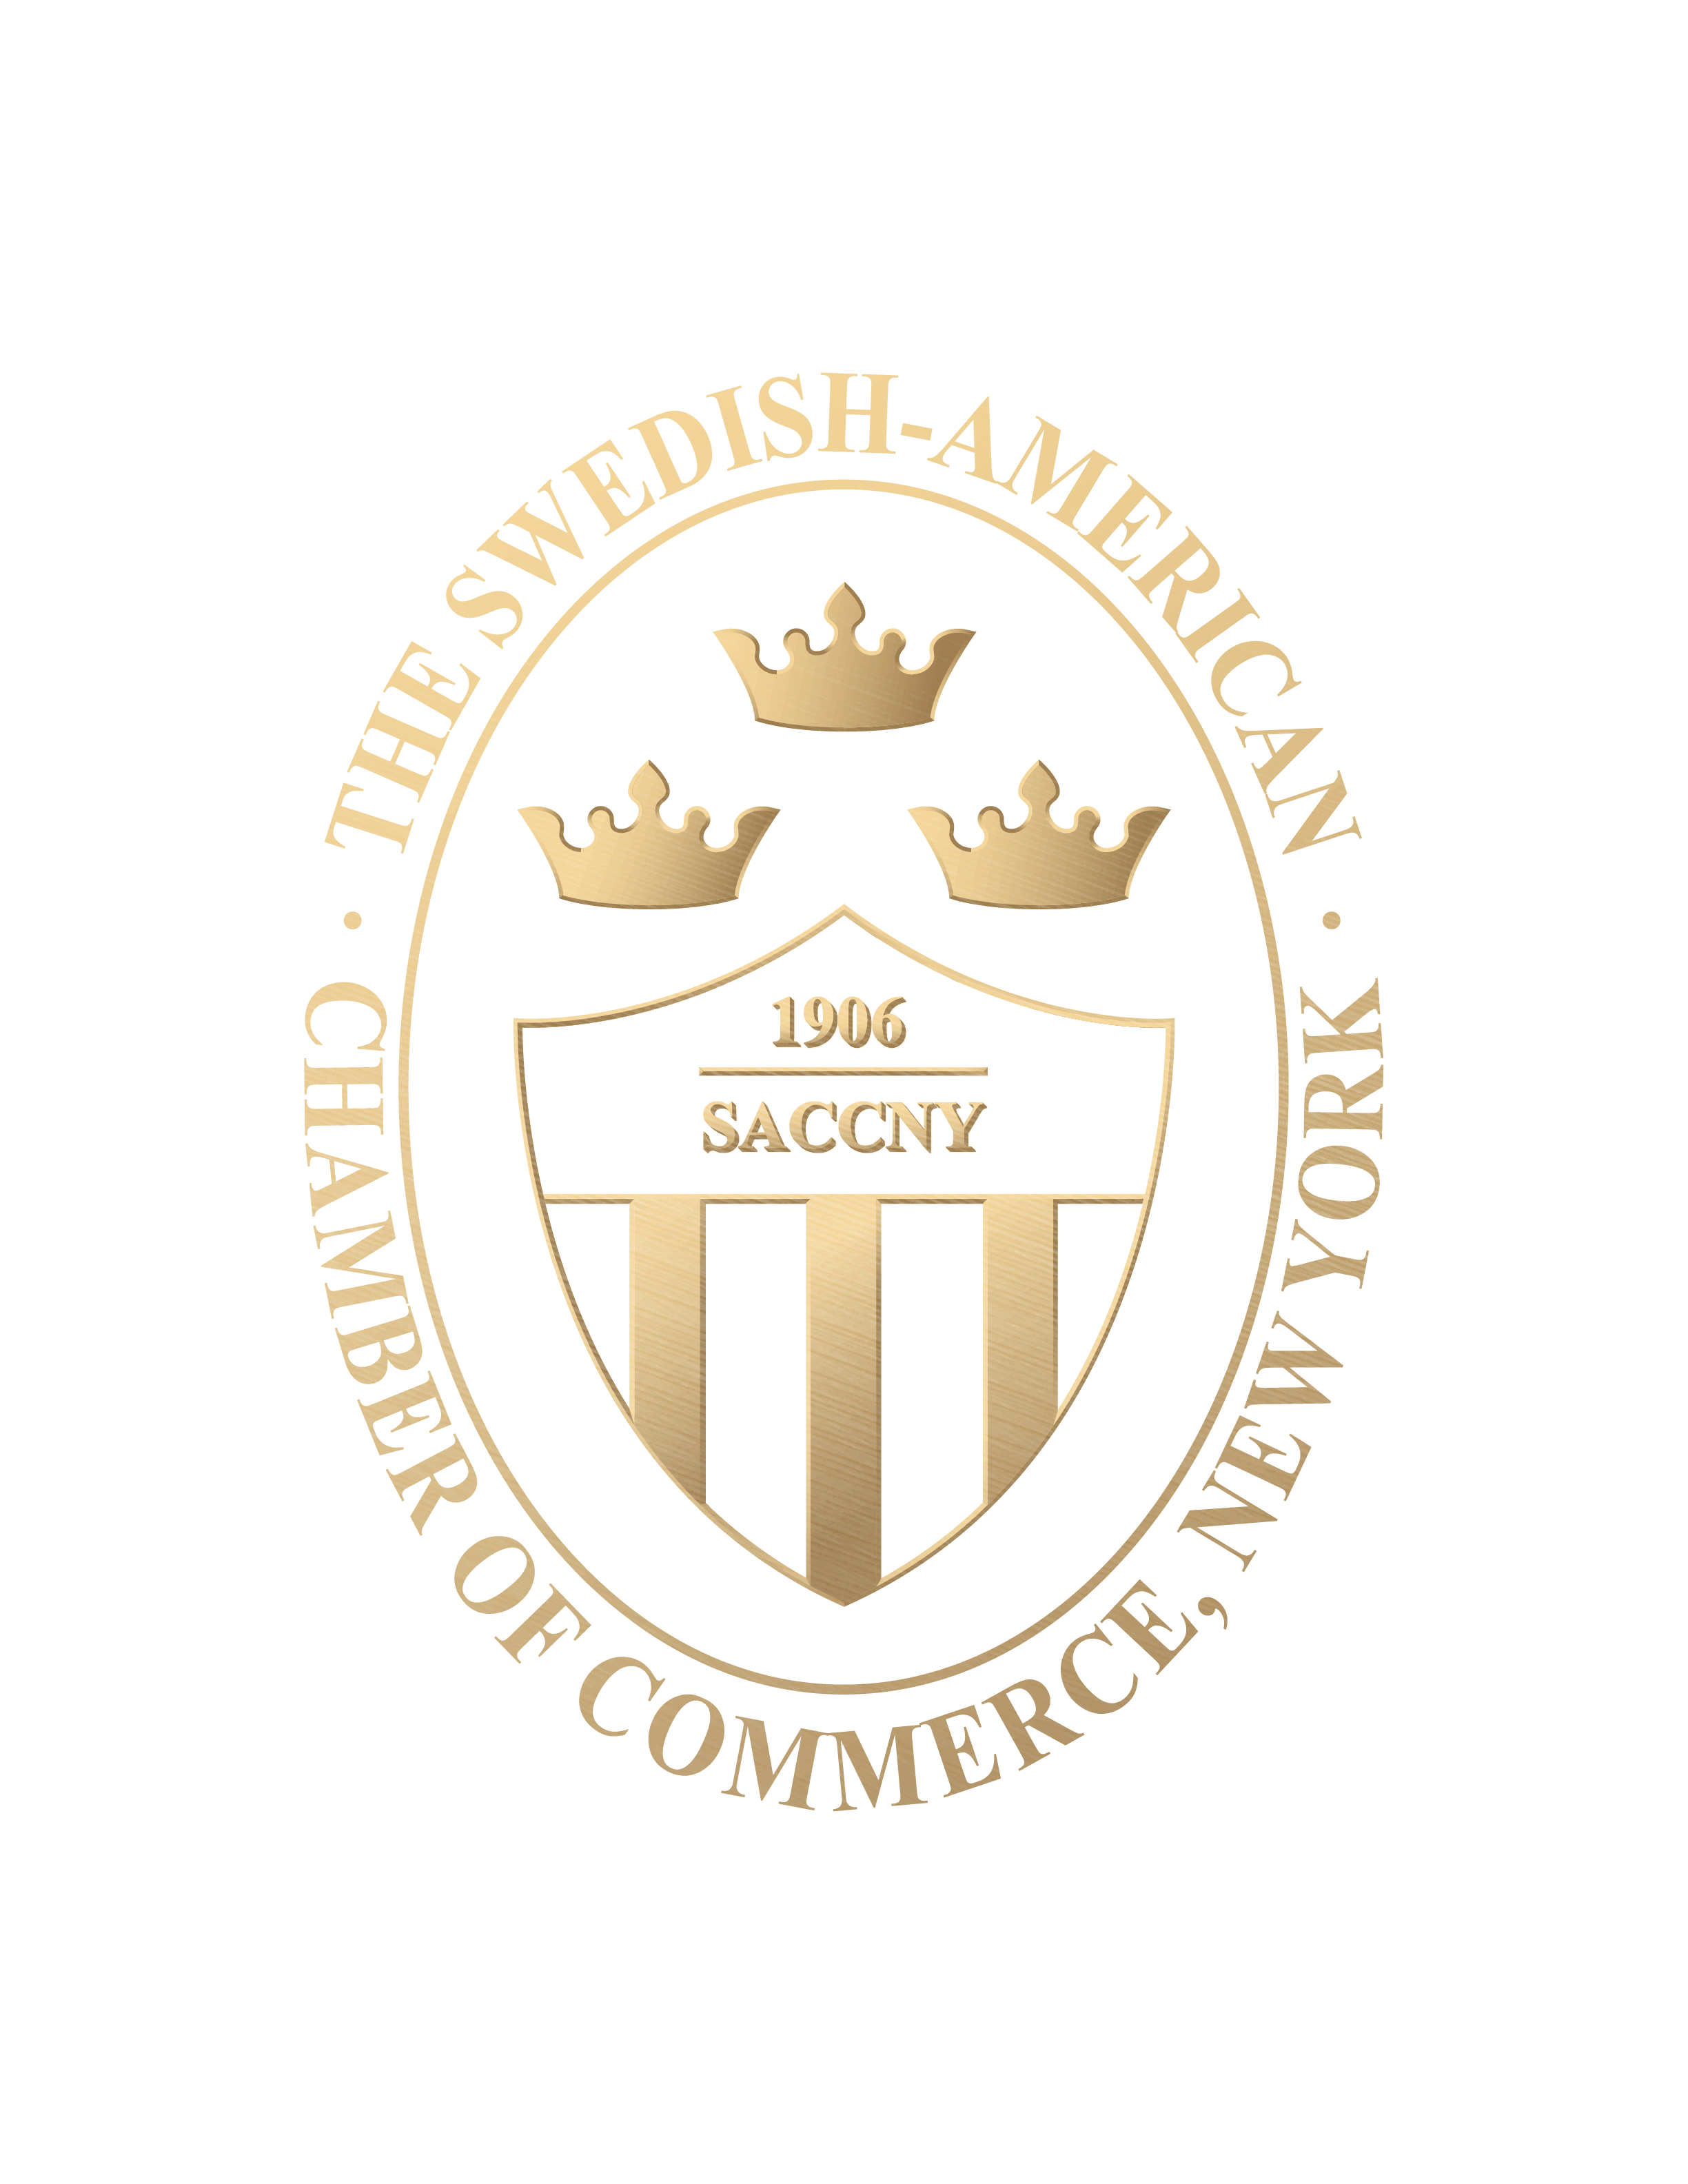 Swedish-American Chambers of Commerce